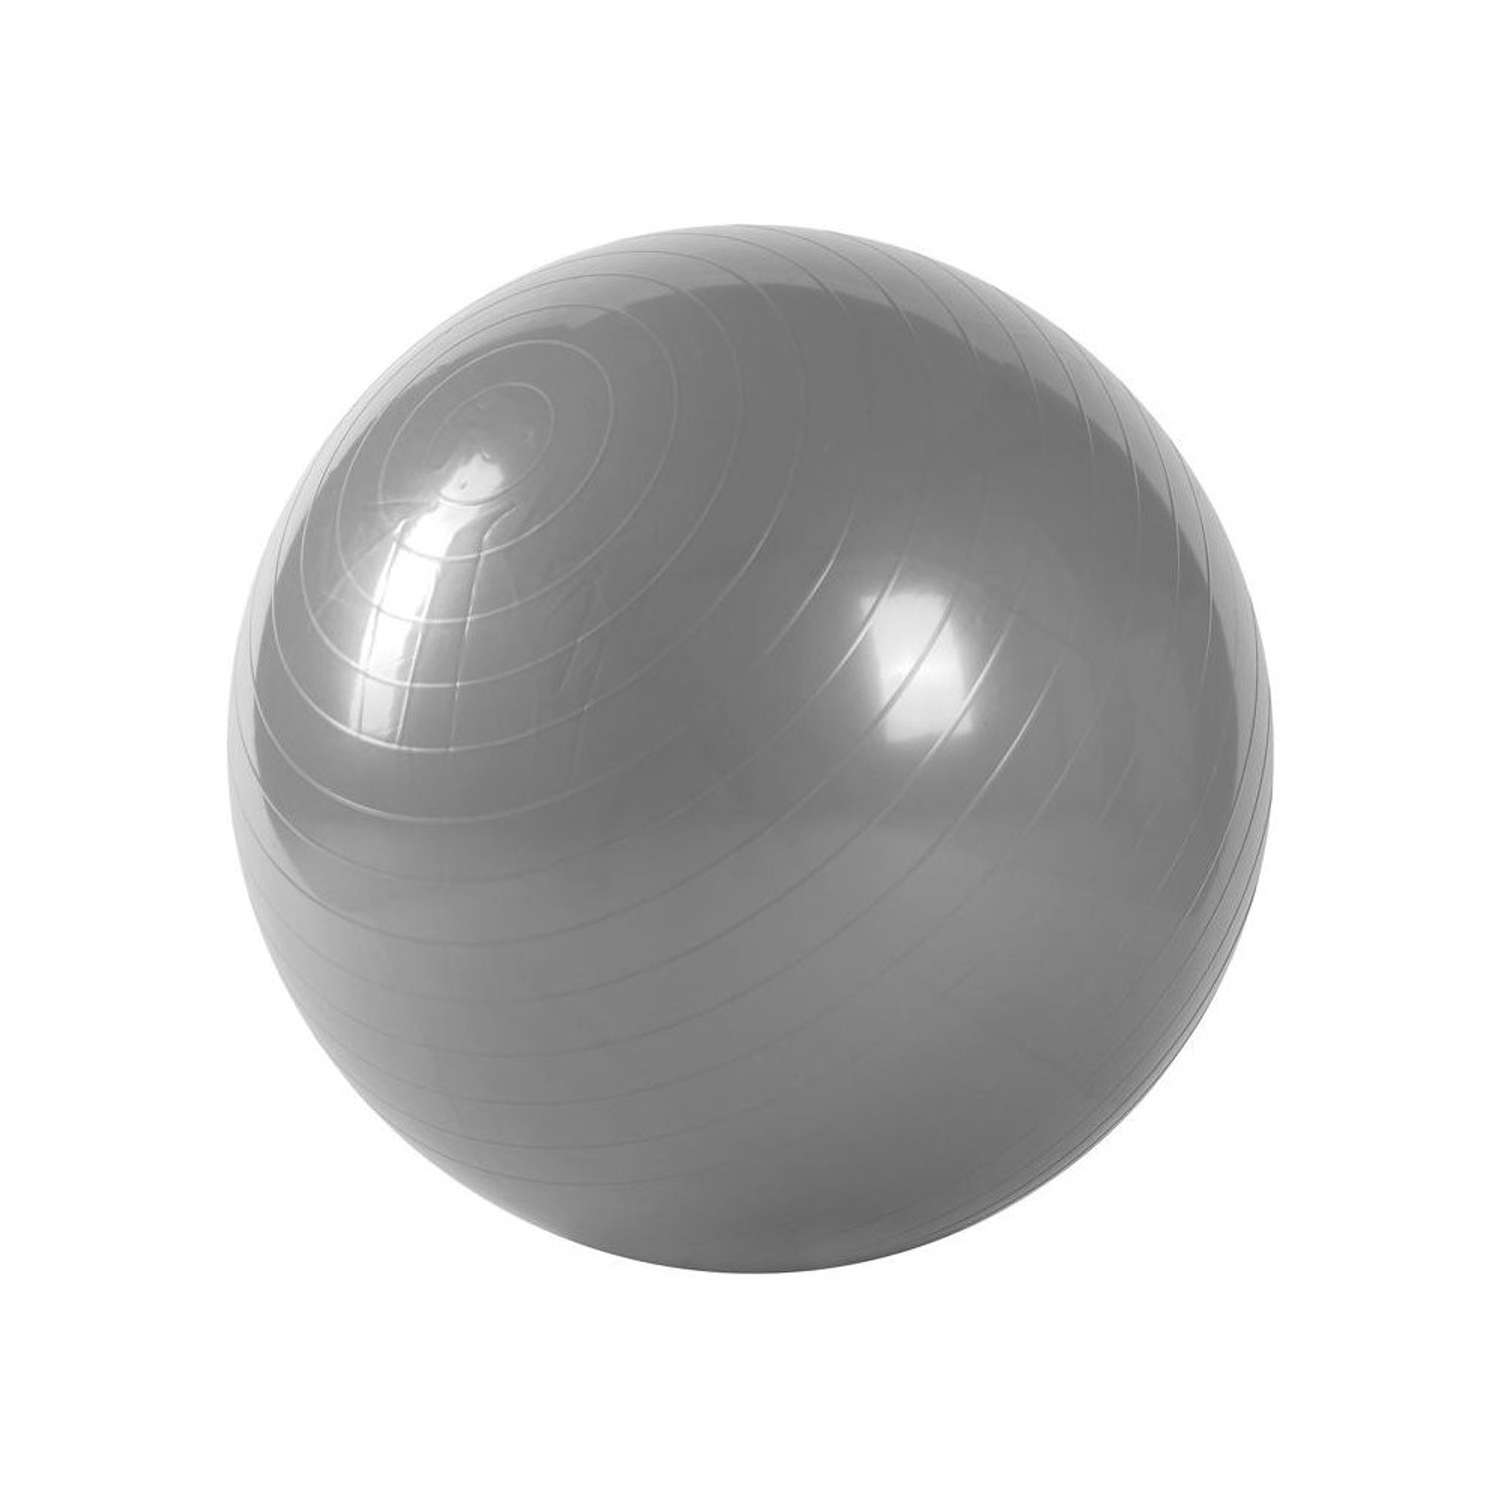 Мяч для фитнеса Uniglodis Серый - фото 1